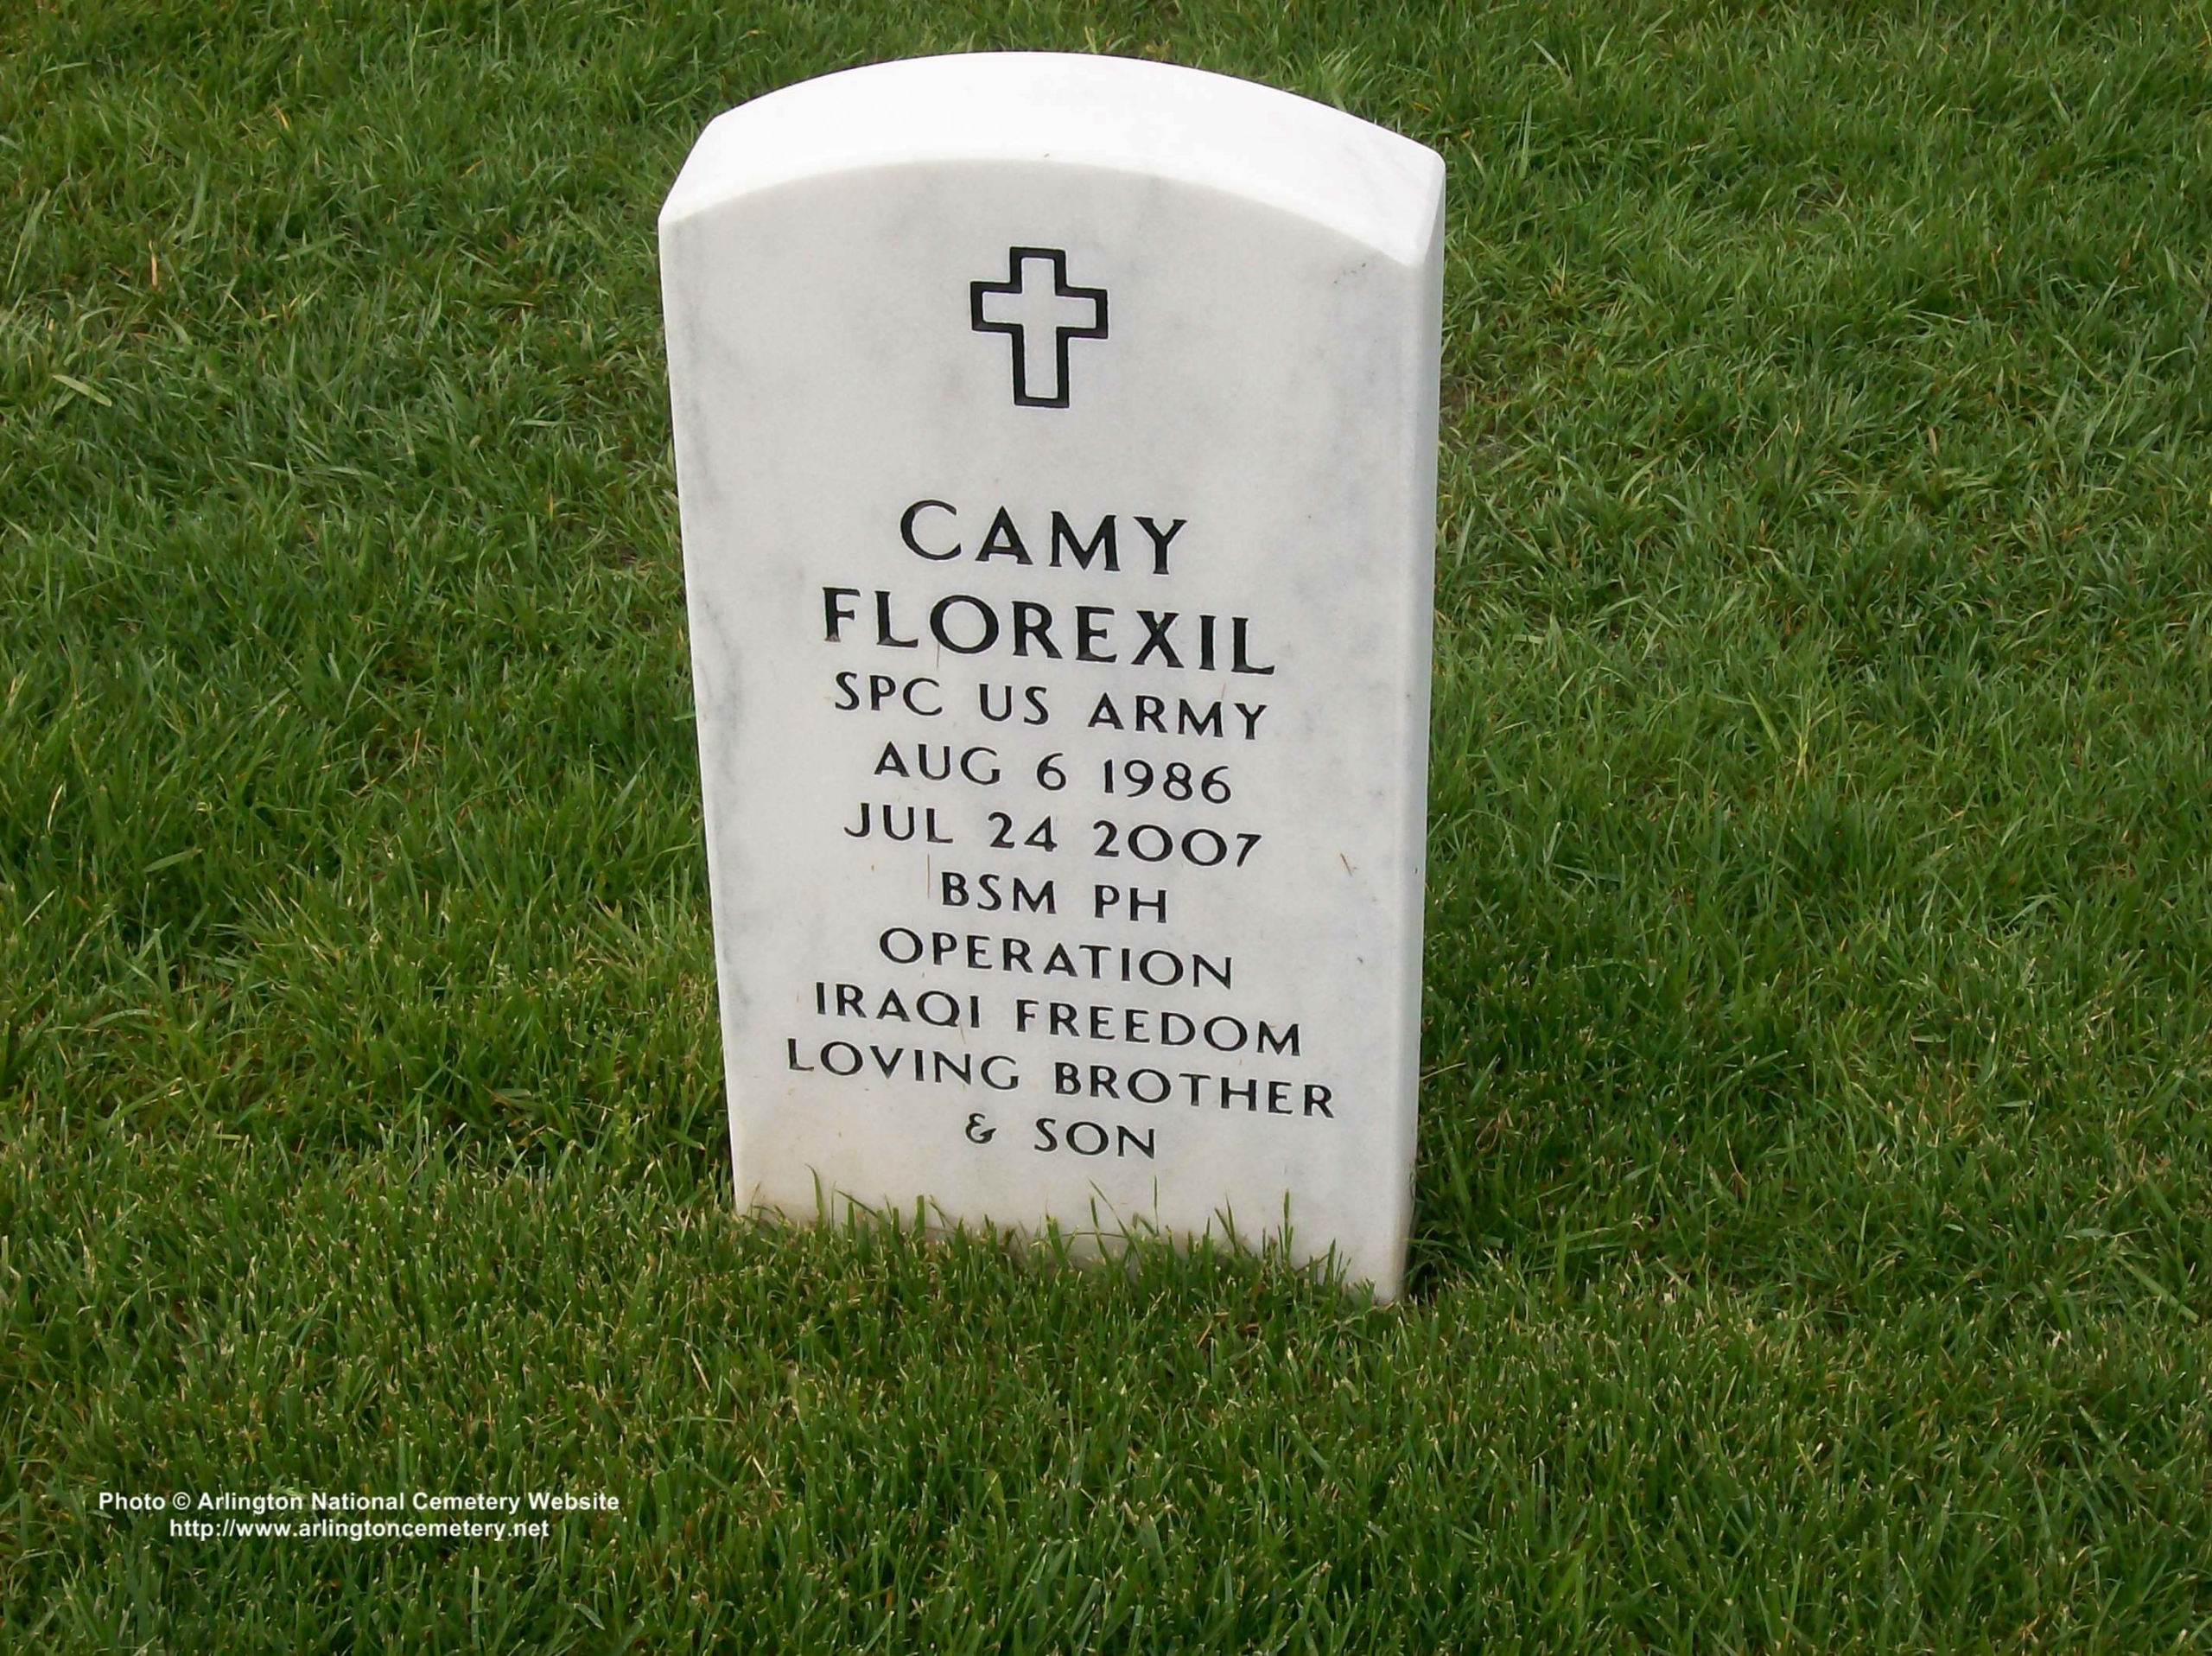 camy-florexil-gravesite-photo-may-2008-001